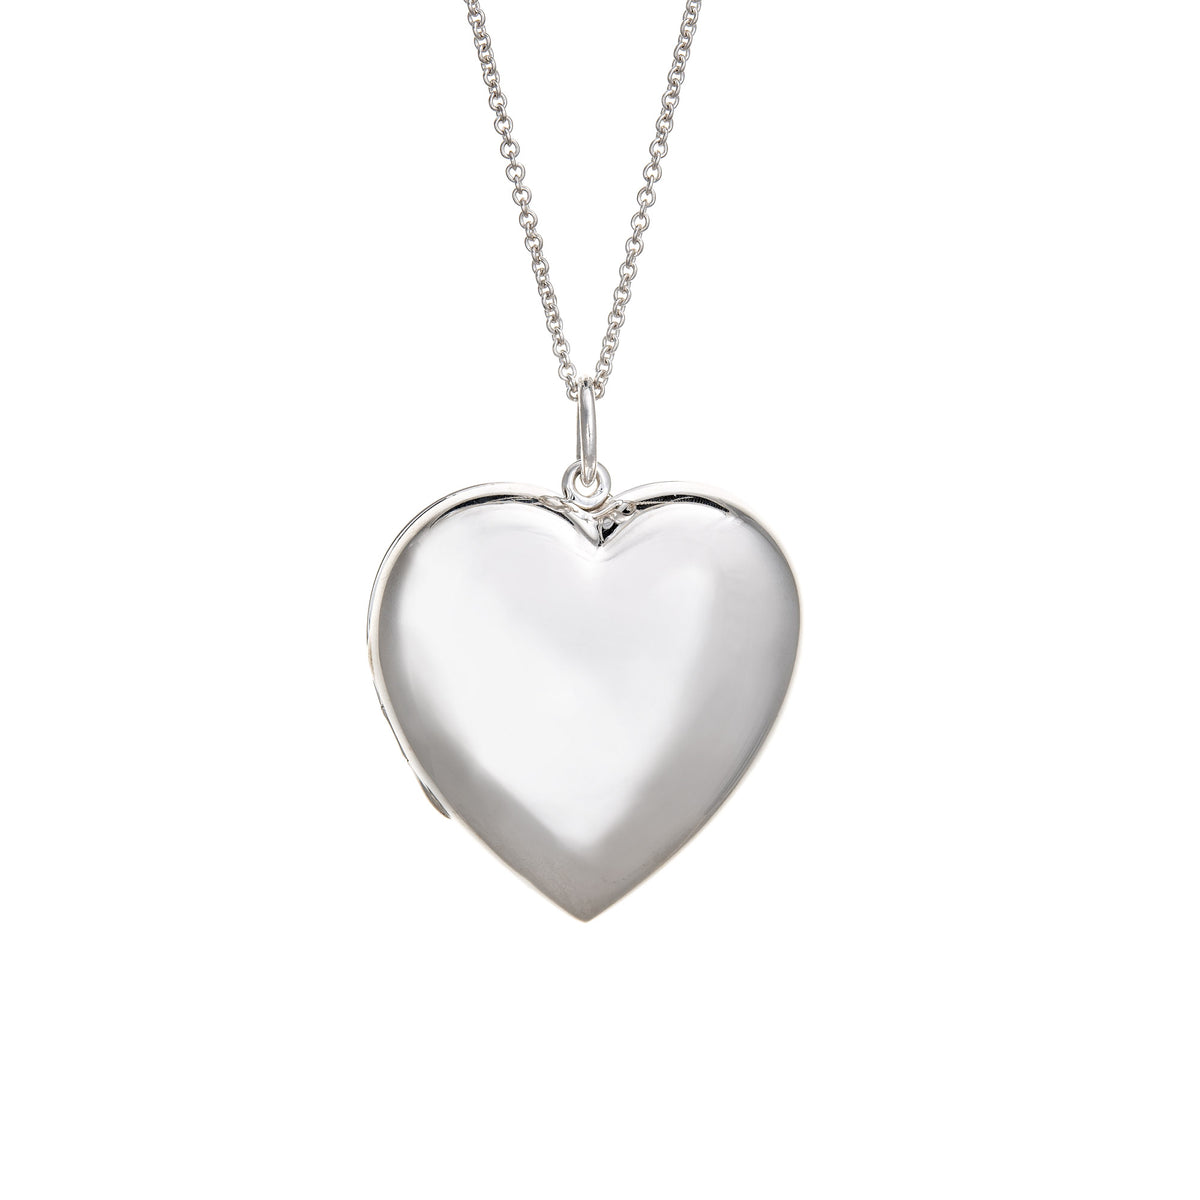 1994 Tiffany & Co Heart Key Necklace Vintage Sterling Silver 18k